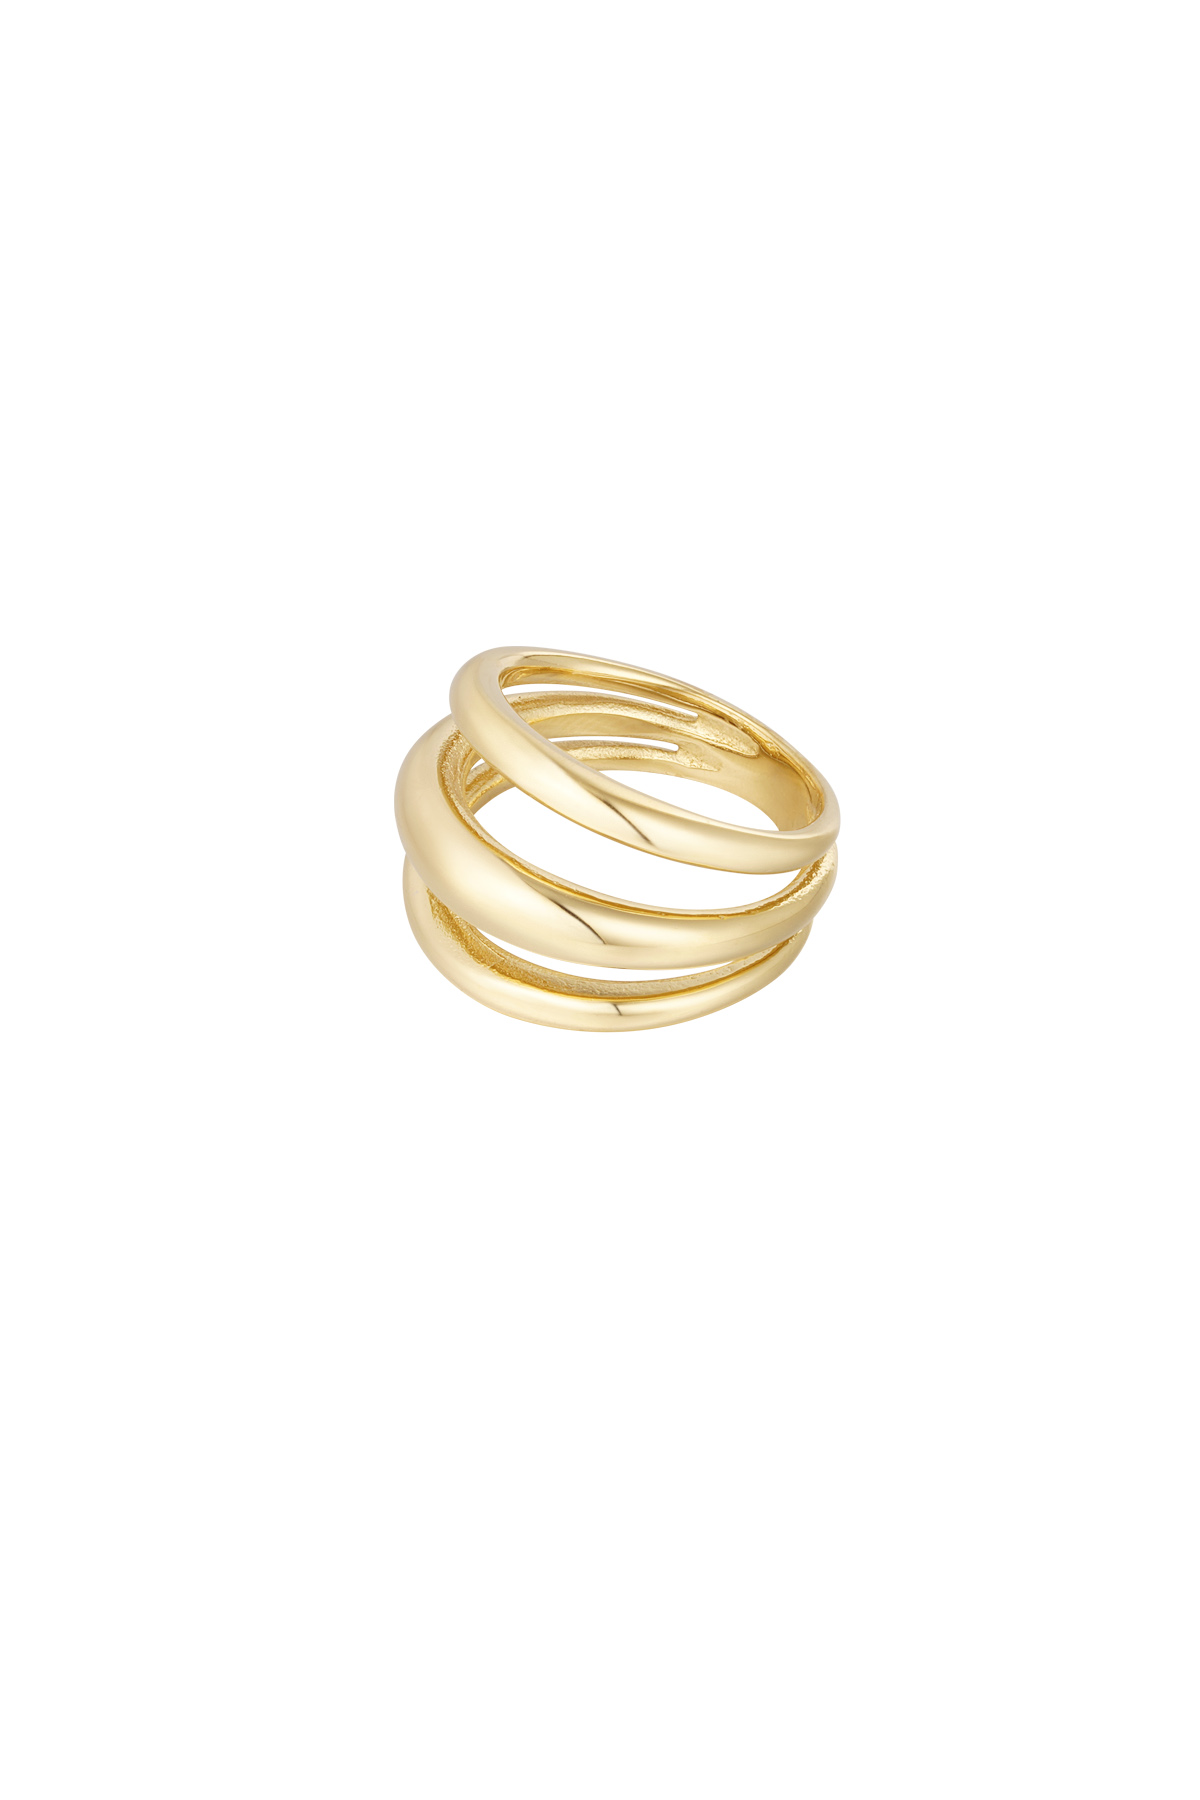 Ring three layers - gold 